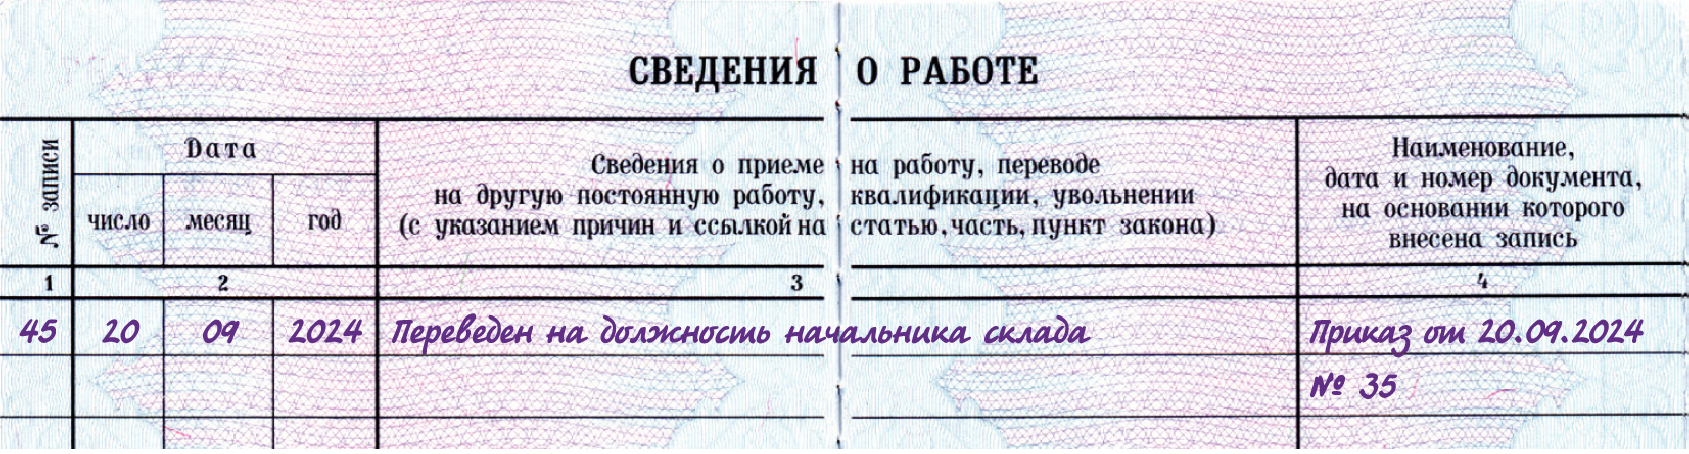 Кража до 5000 рублей